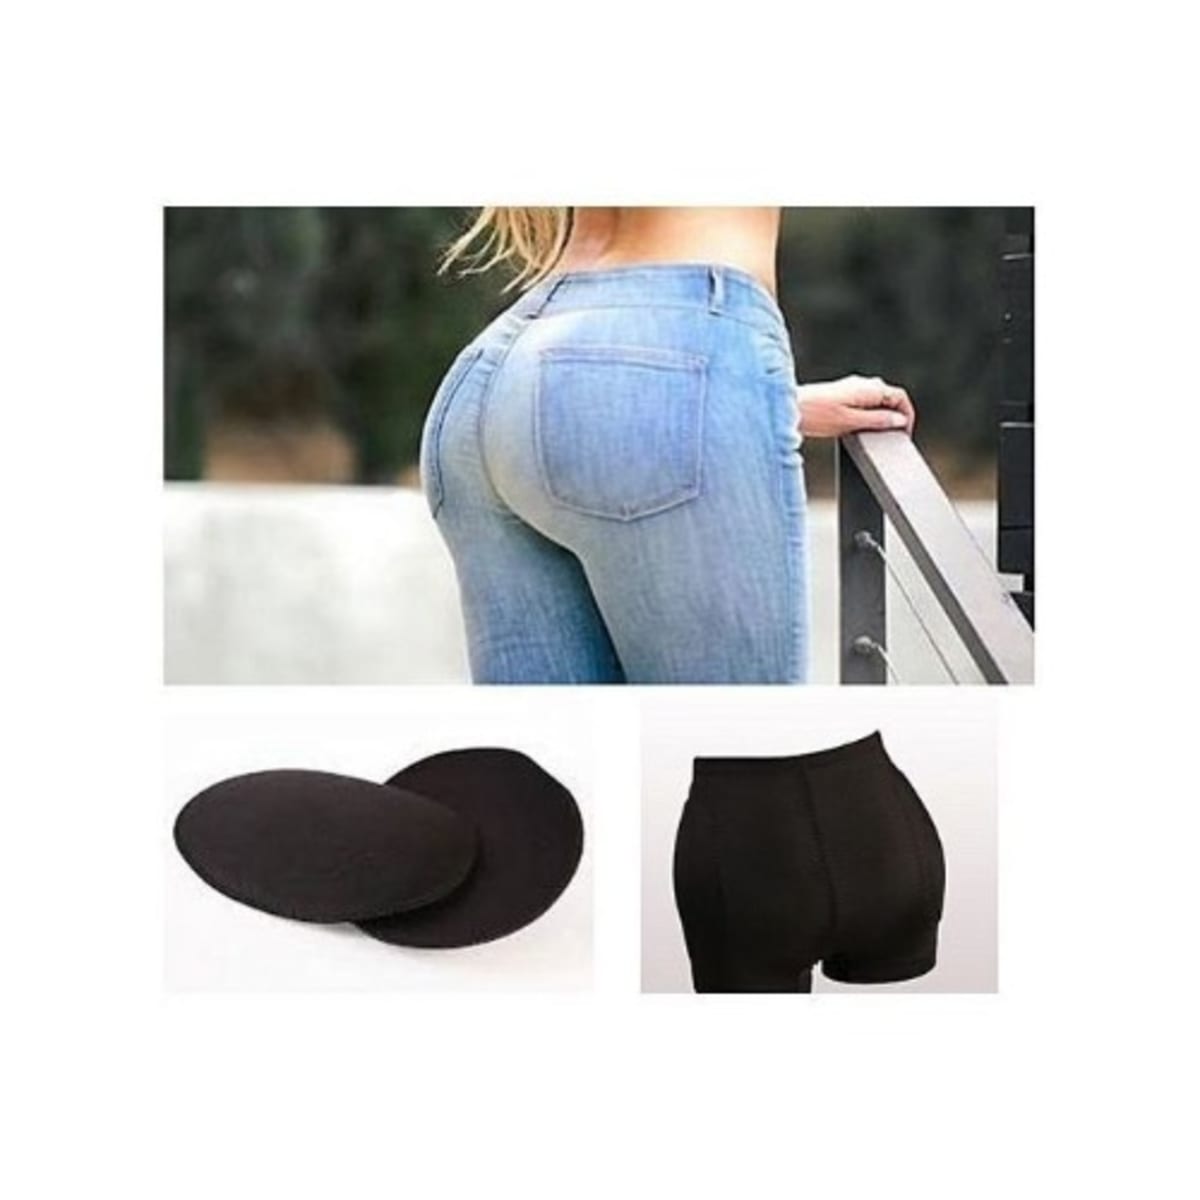 Fashion Detachable Butt & Hip Padded Underwear-black